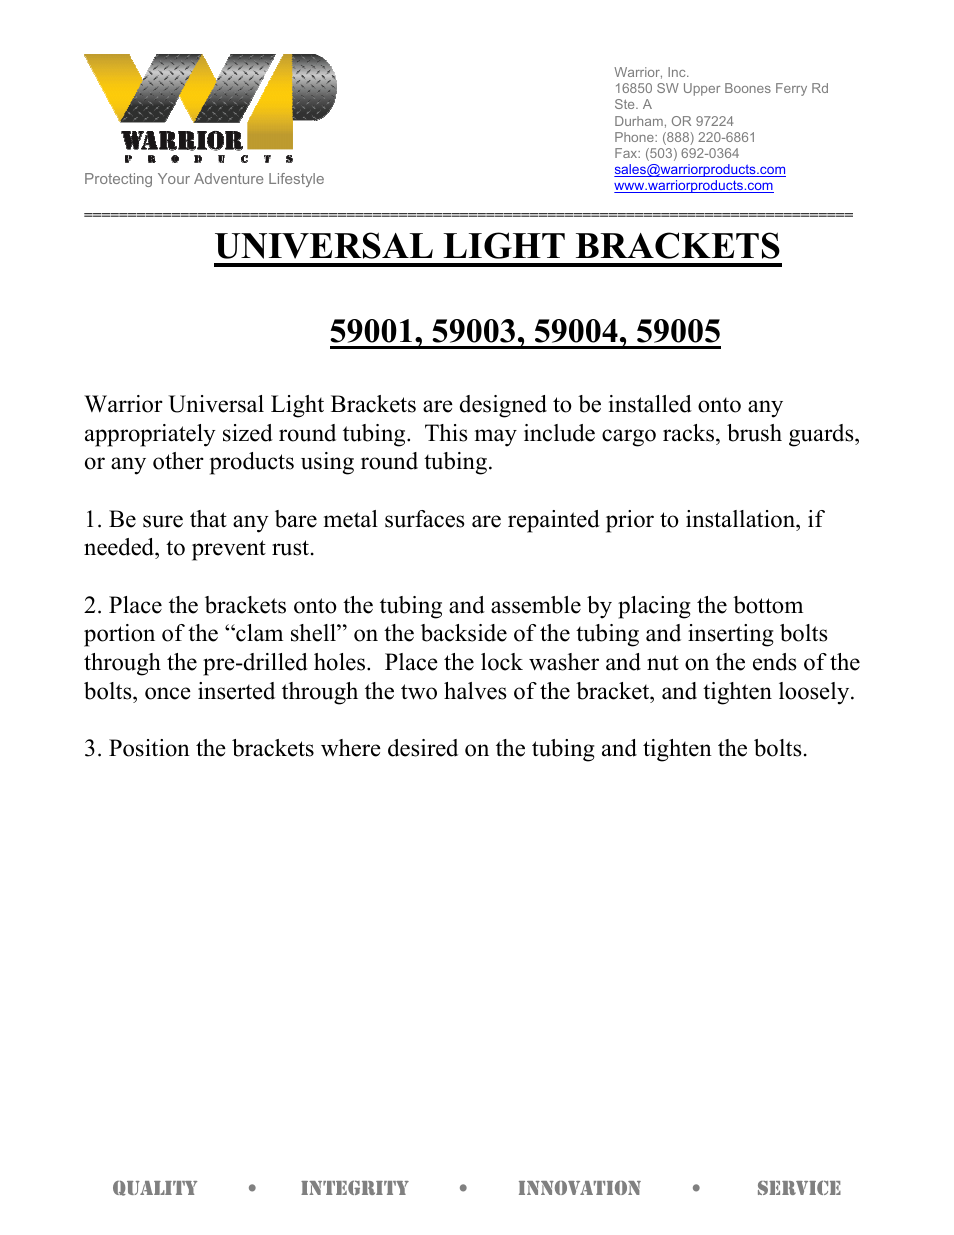 59005 AUXILIARY LIGHT BRACKETS (Universal)